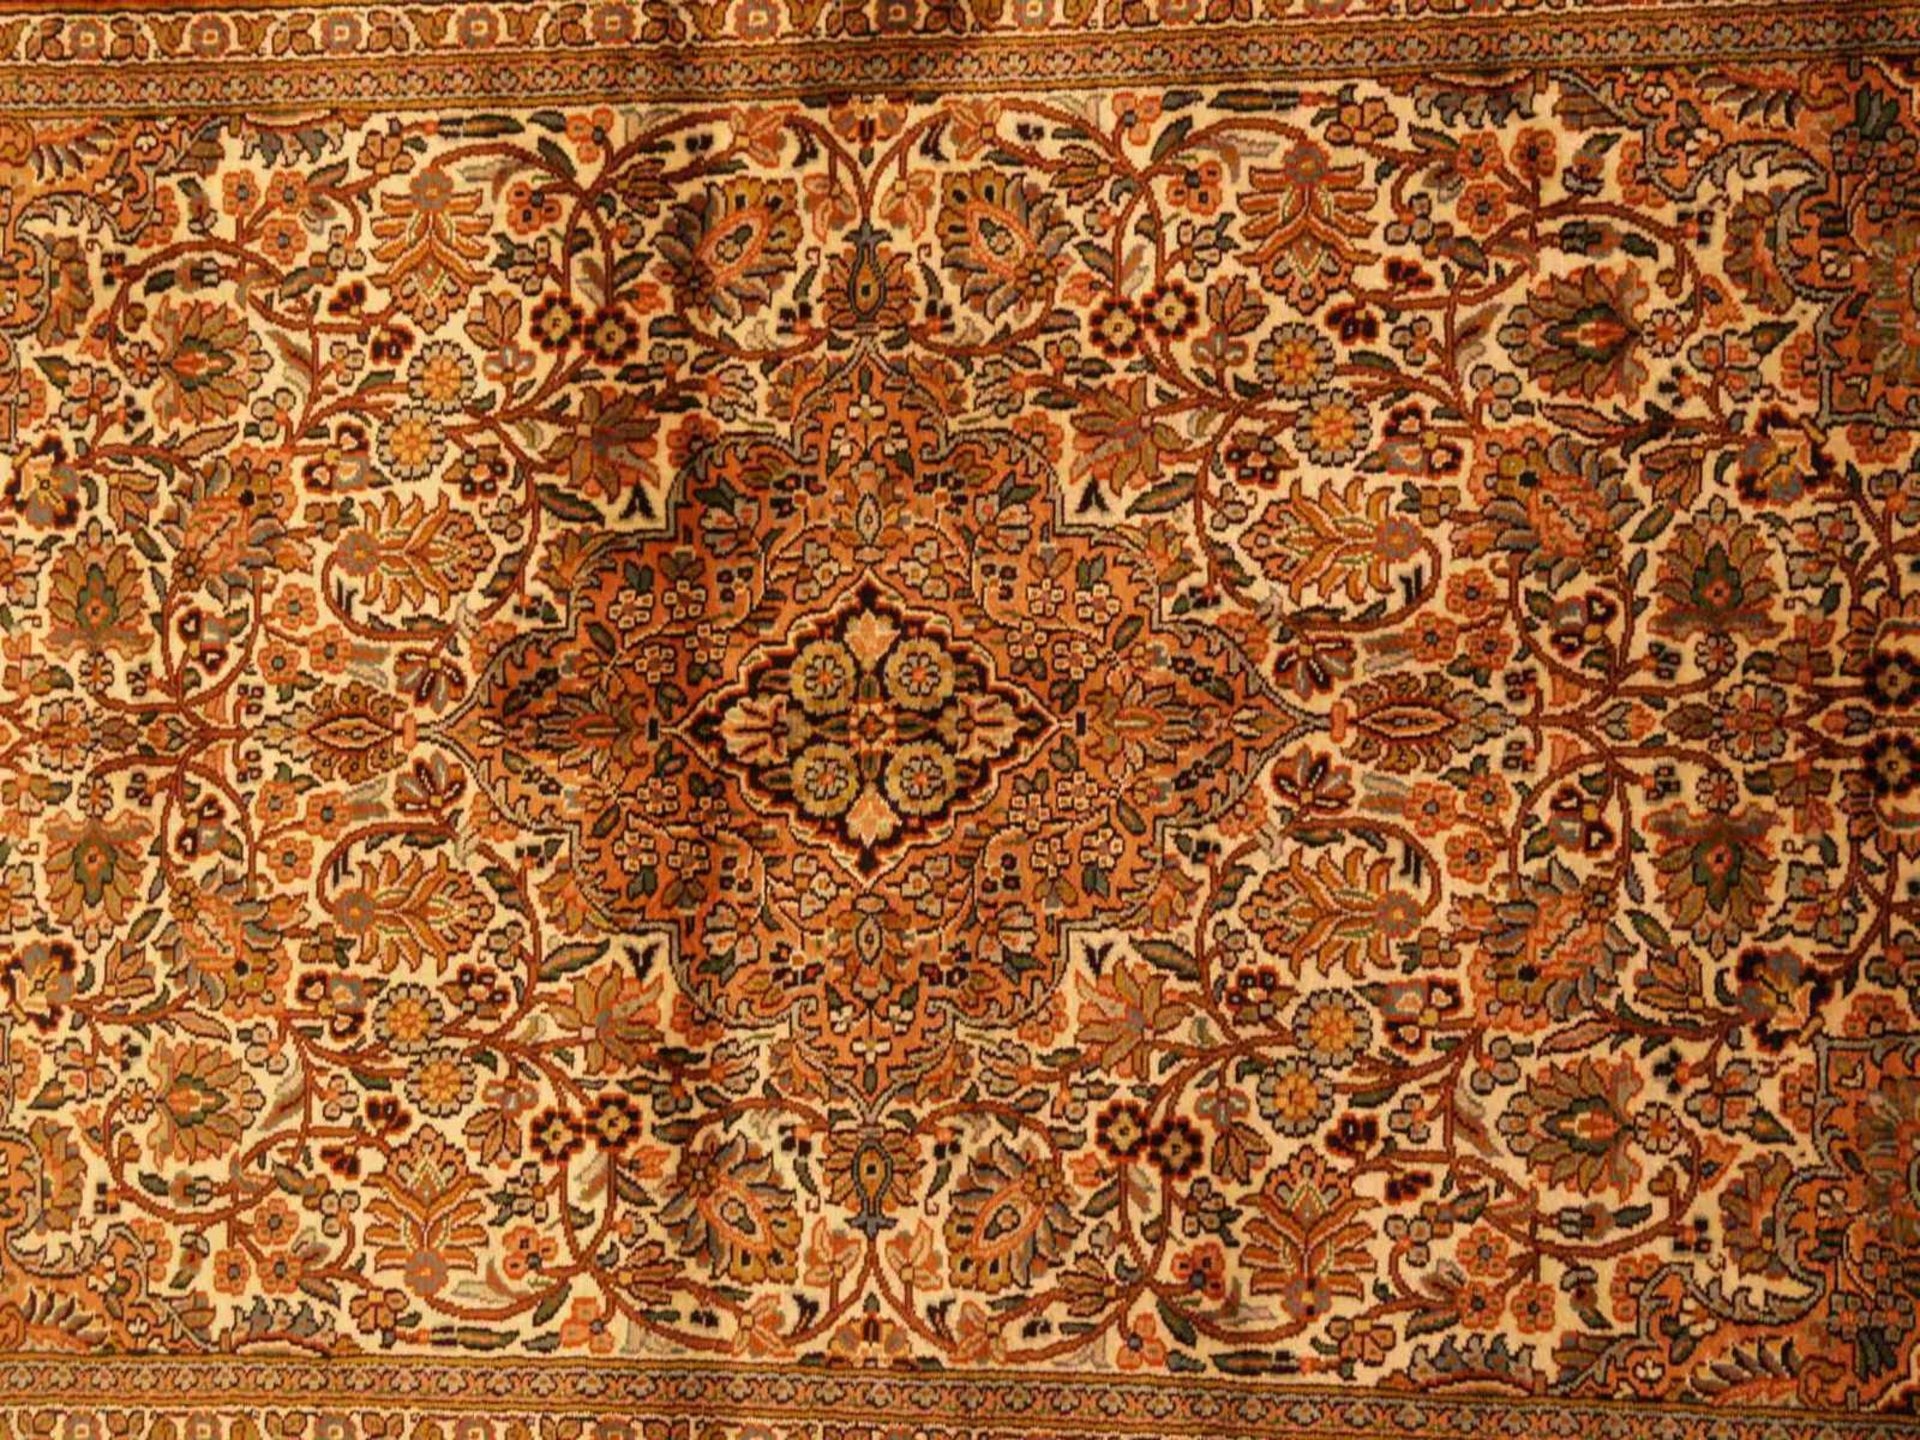 Orientteppich - Kaschmir,Seide auf Seide,sehr feine Knüpfung,Medaillon ziegelfarbig,florales - Bild 2 aus 5